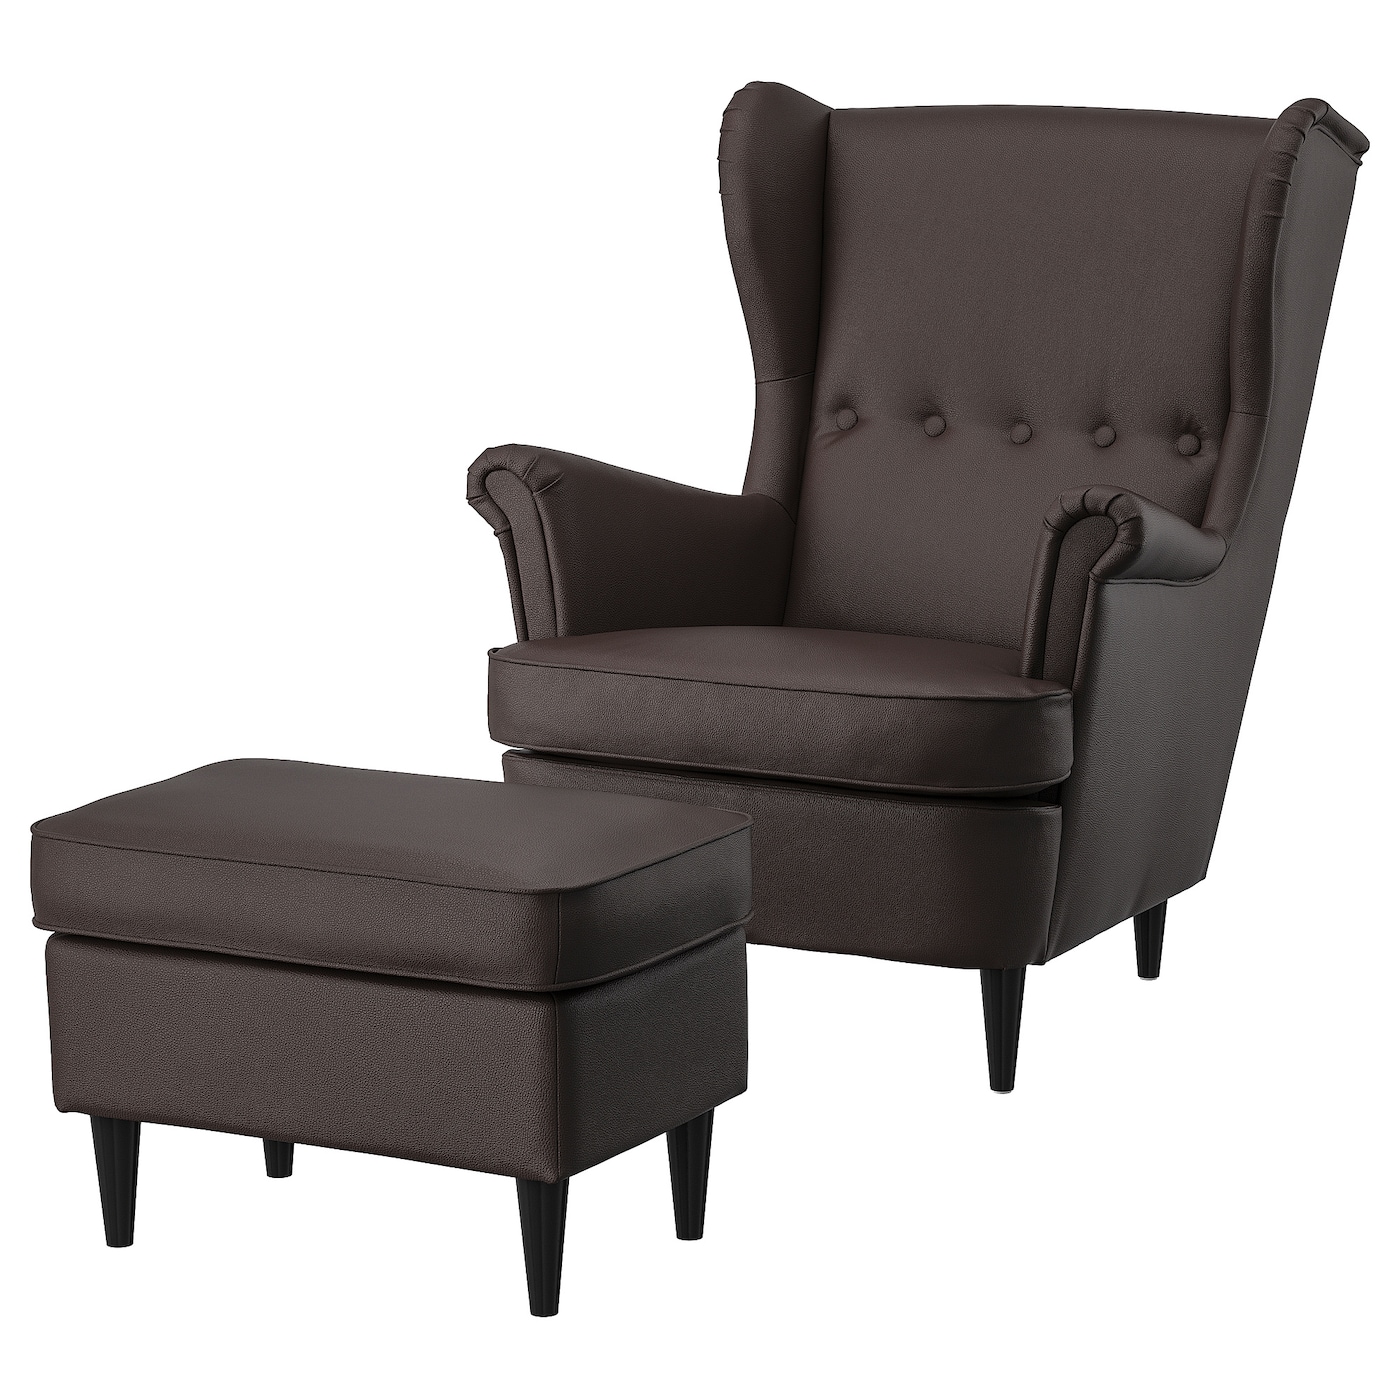 Кресло и табурет для ног - IKEA STRANDMON, 82х96х101 см,  темно-коричневый, СТРАНДМОН ИКЕА